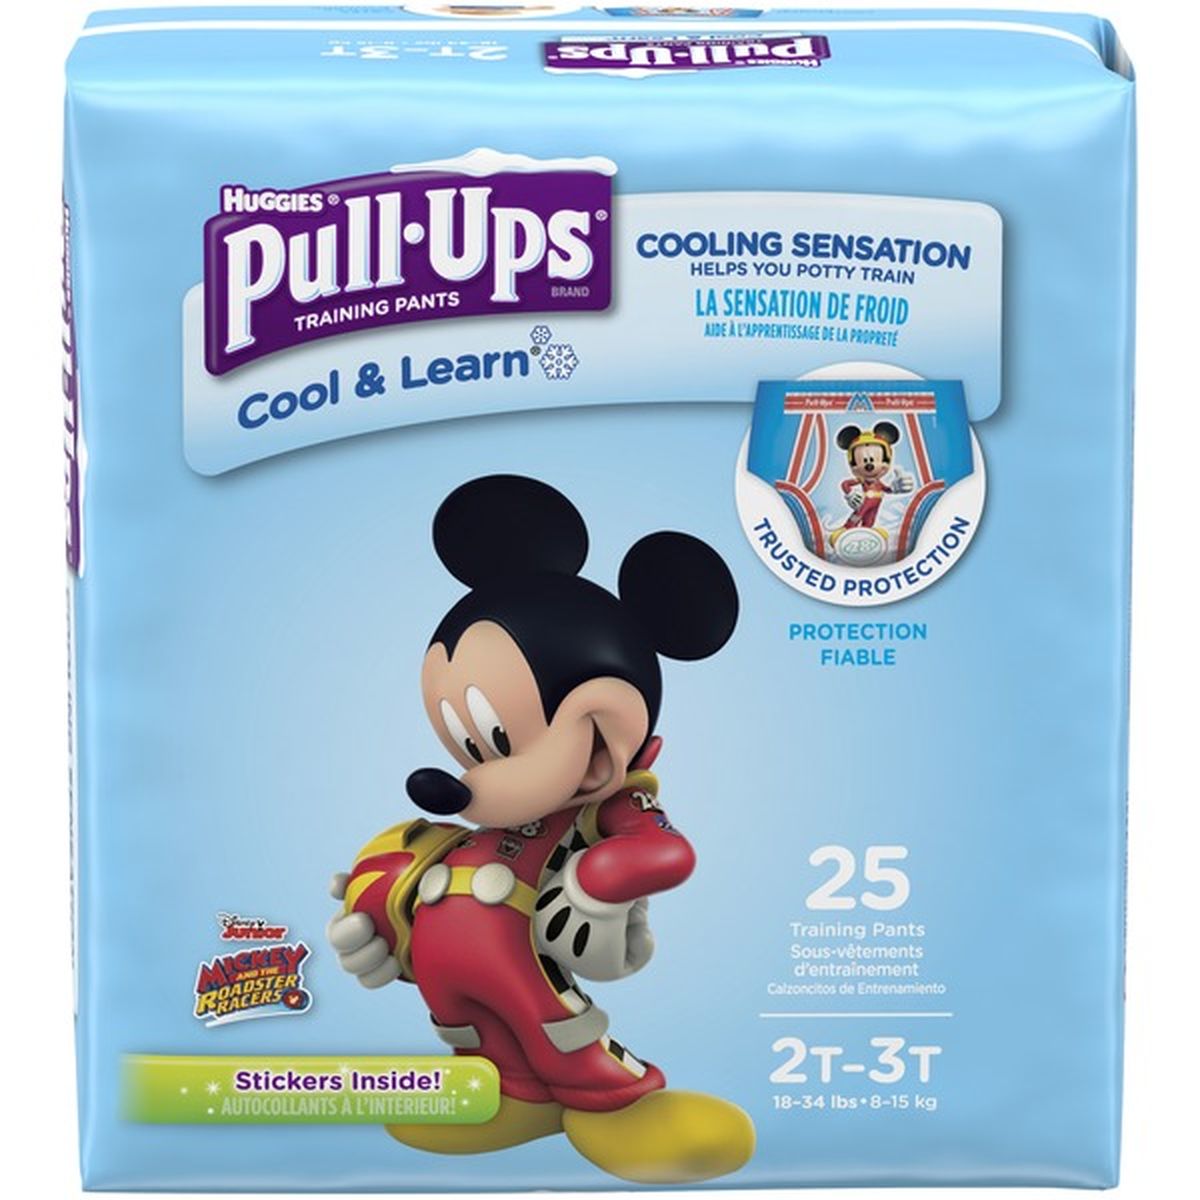 Pull Ups Night Time Training Pants, 2T-3T (18-34 lbs), Disney